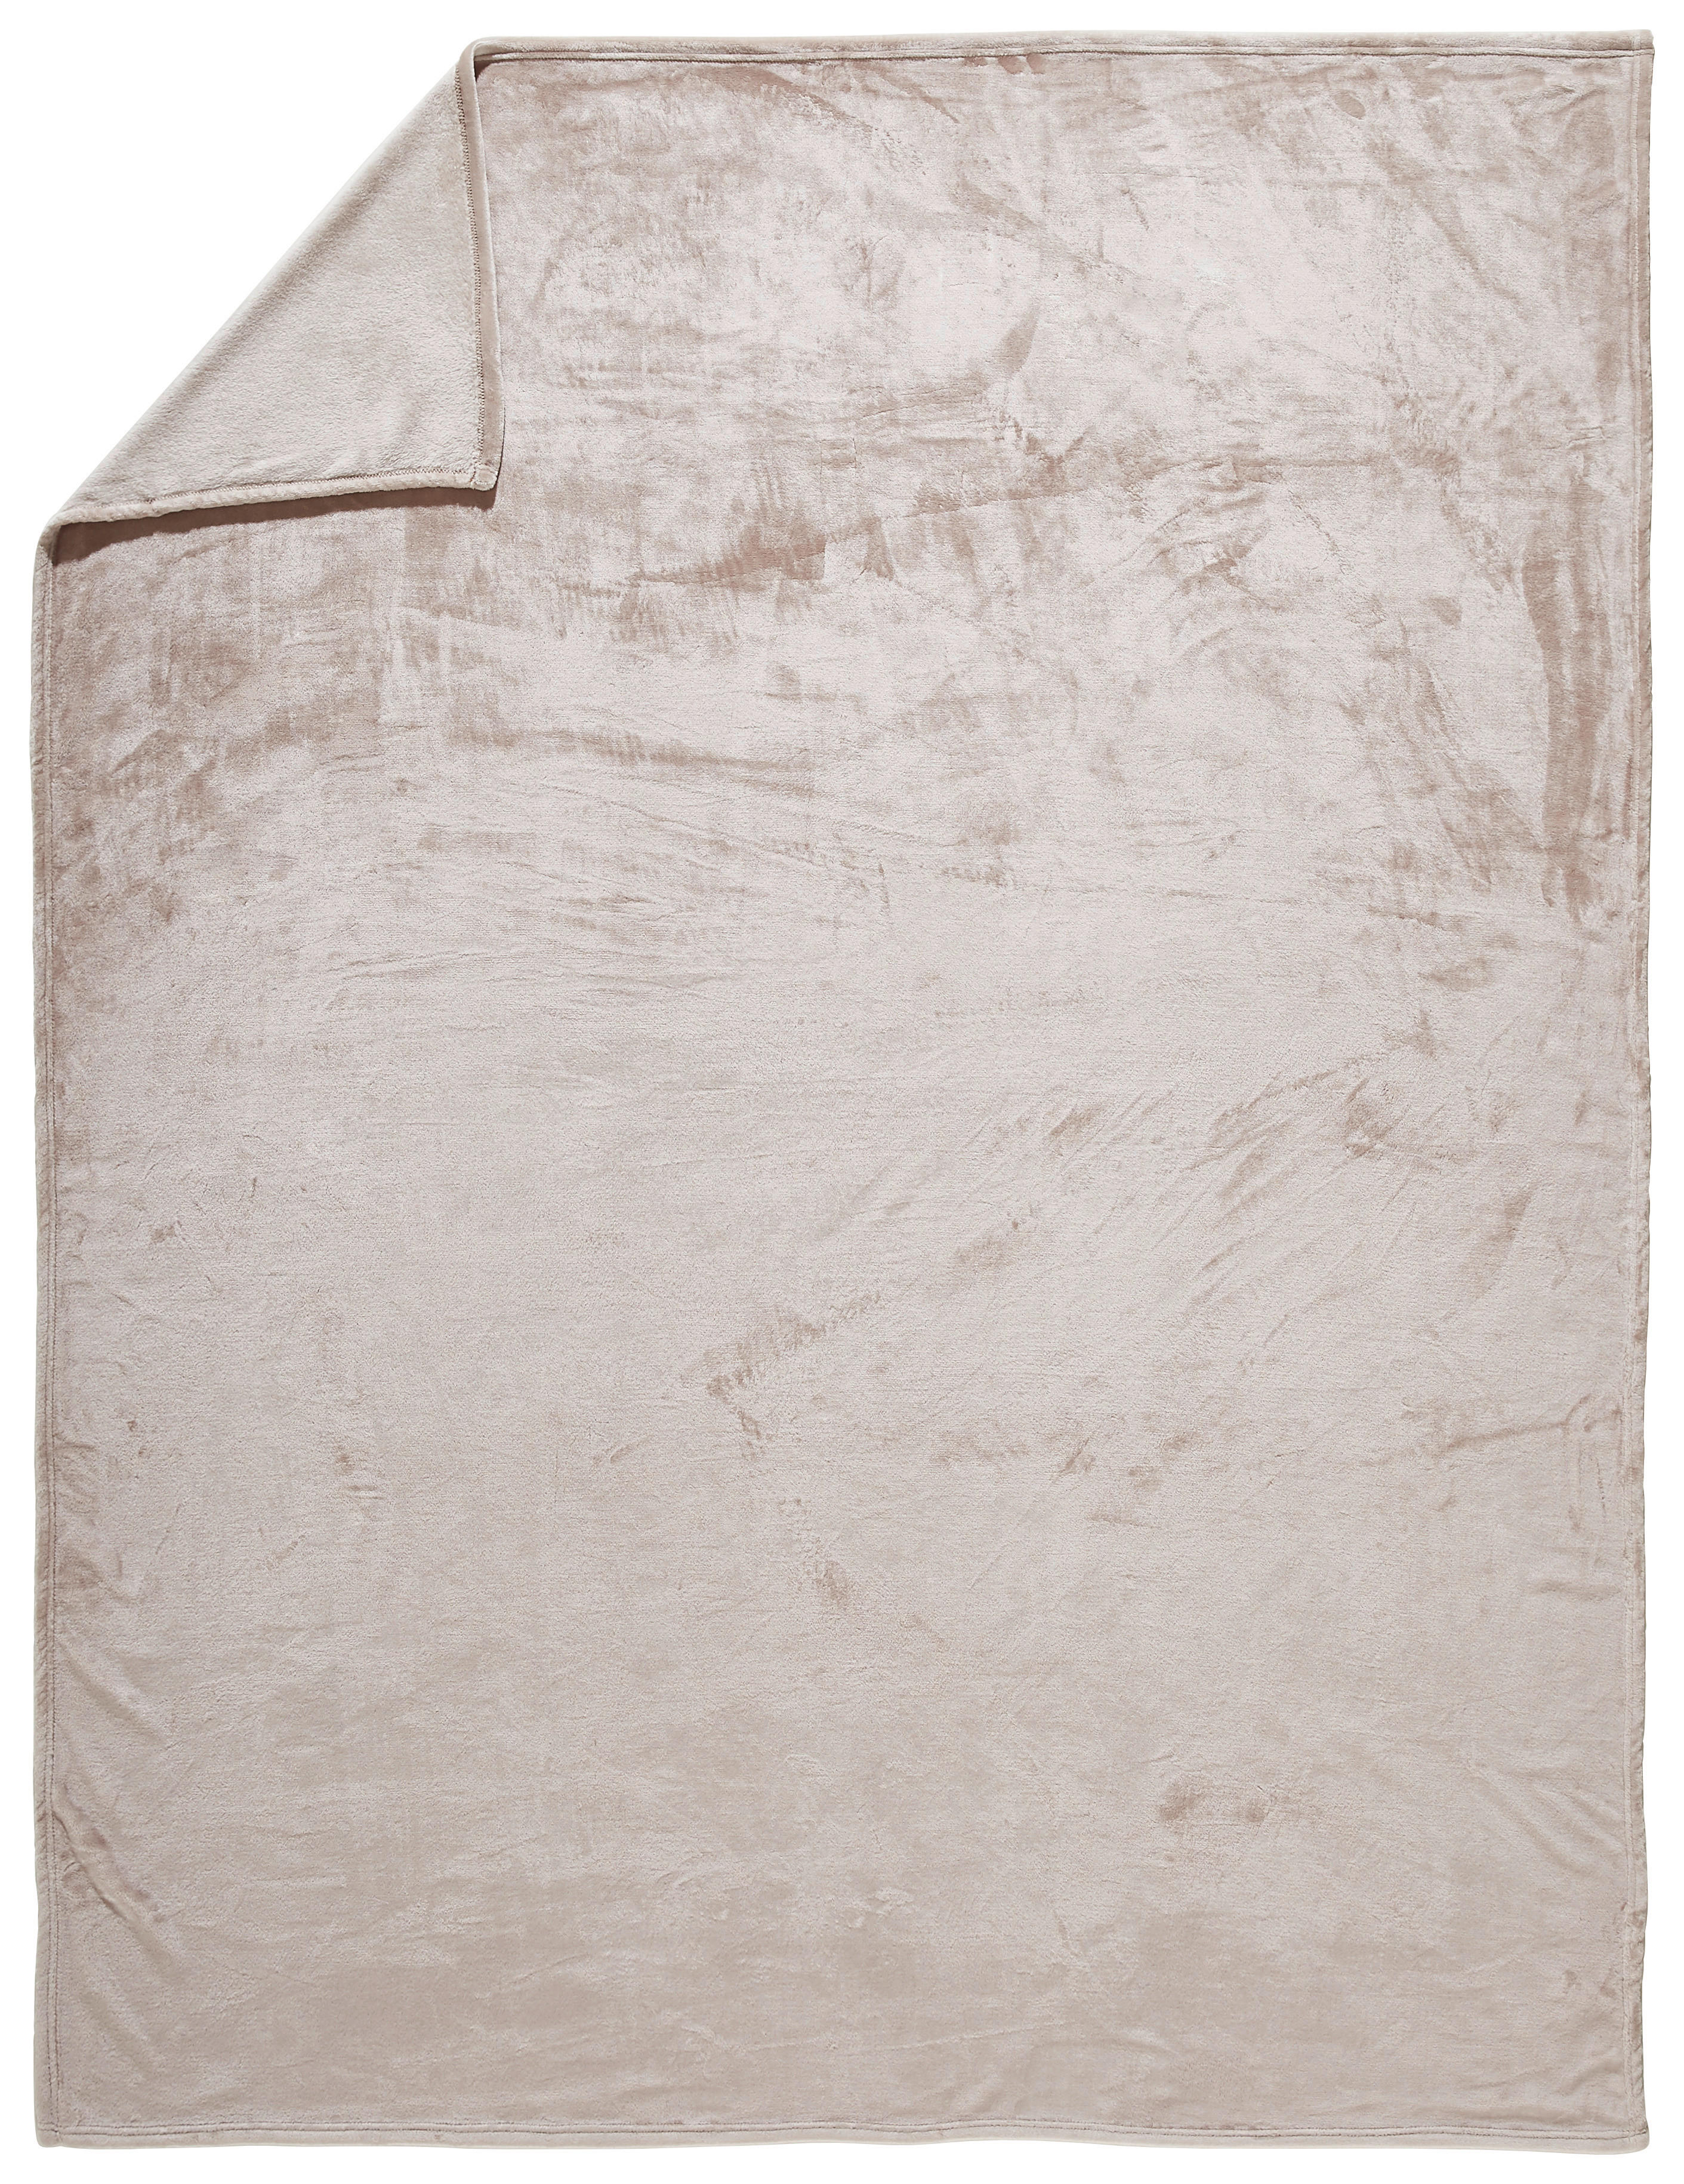 WOHNDECKE 220/240 cm  - Taupe, KONVENTIONELL, Textil (220/240cm) - Novel